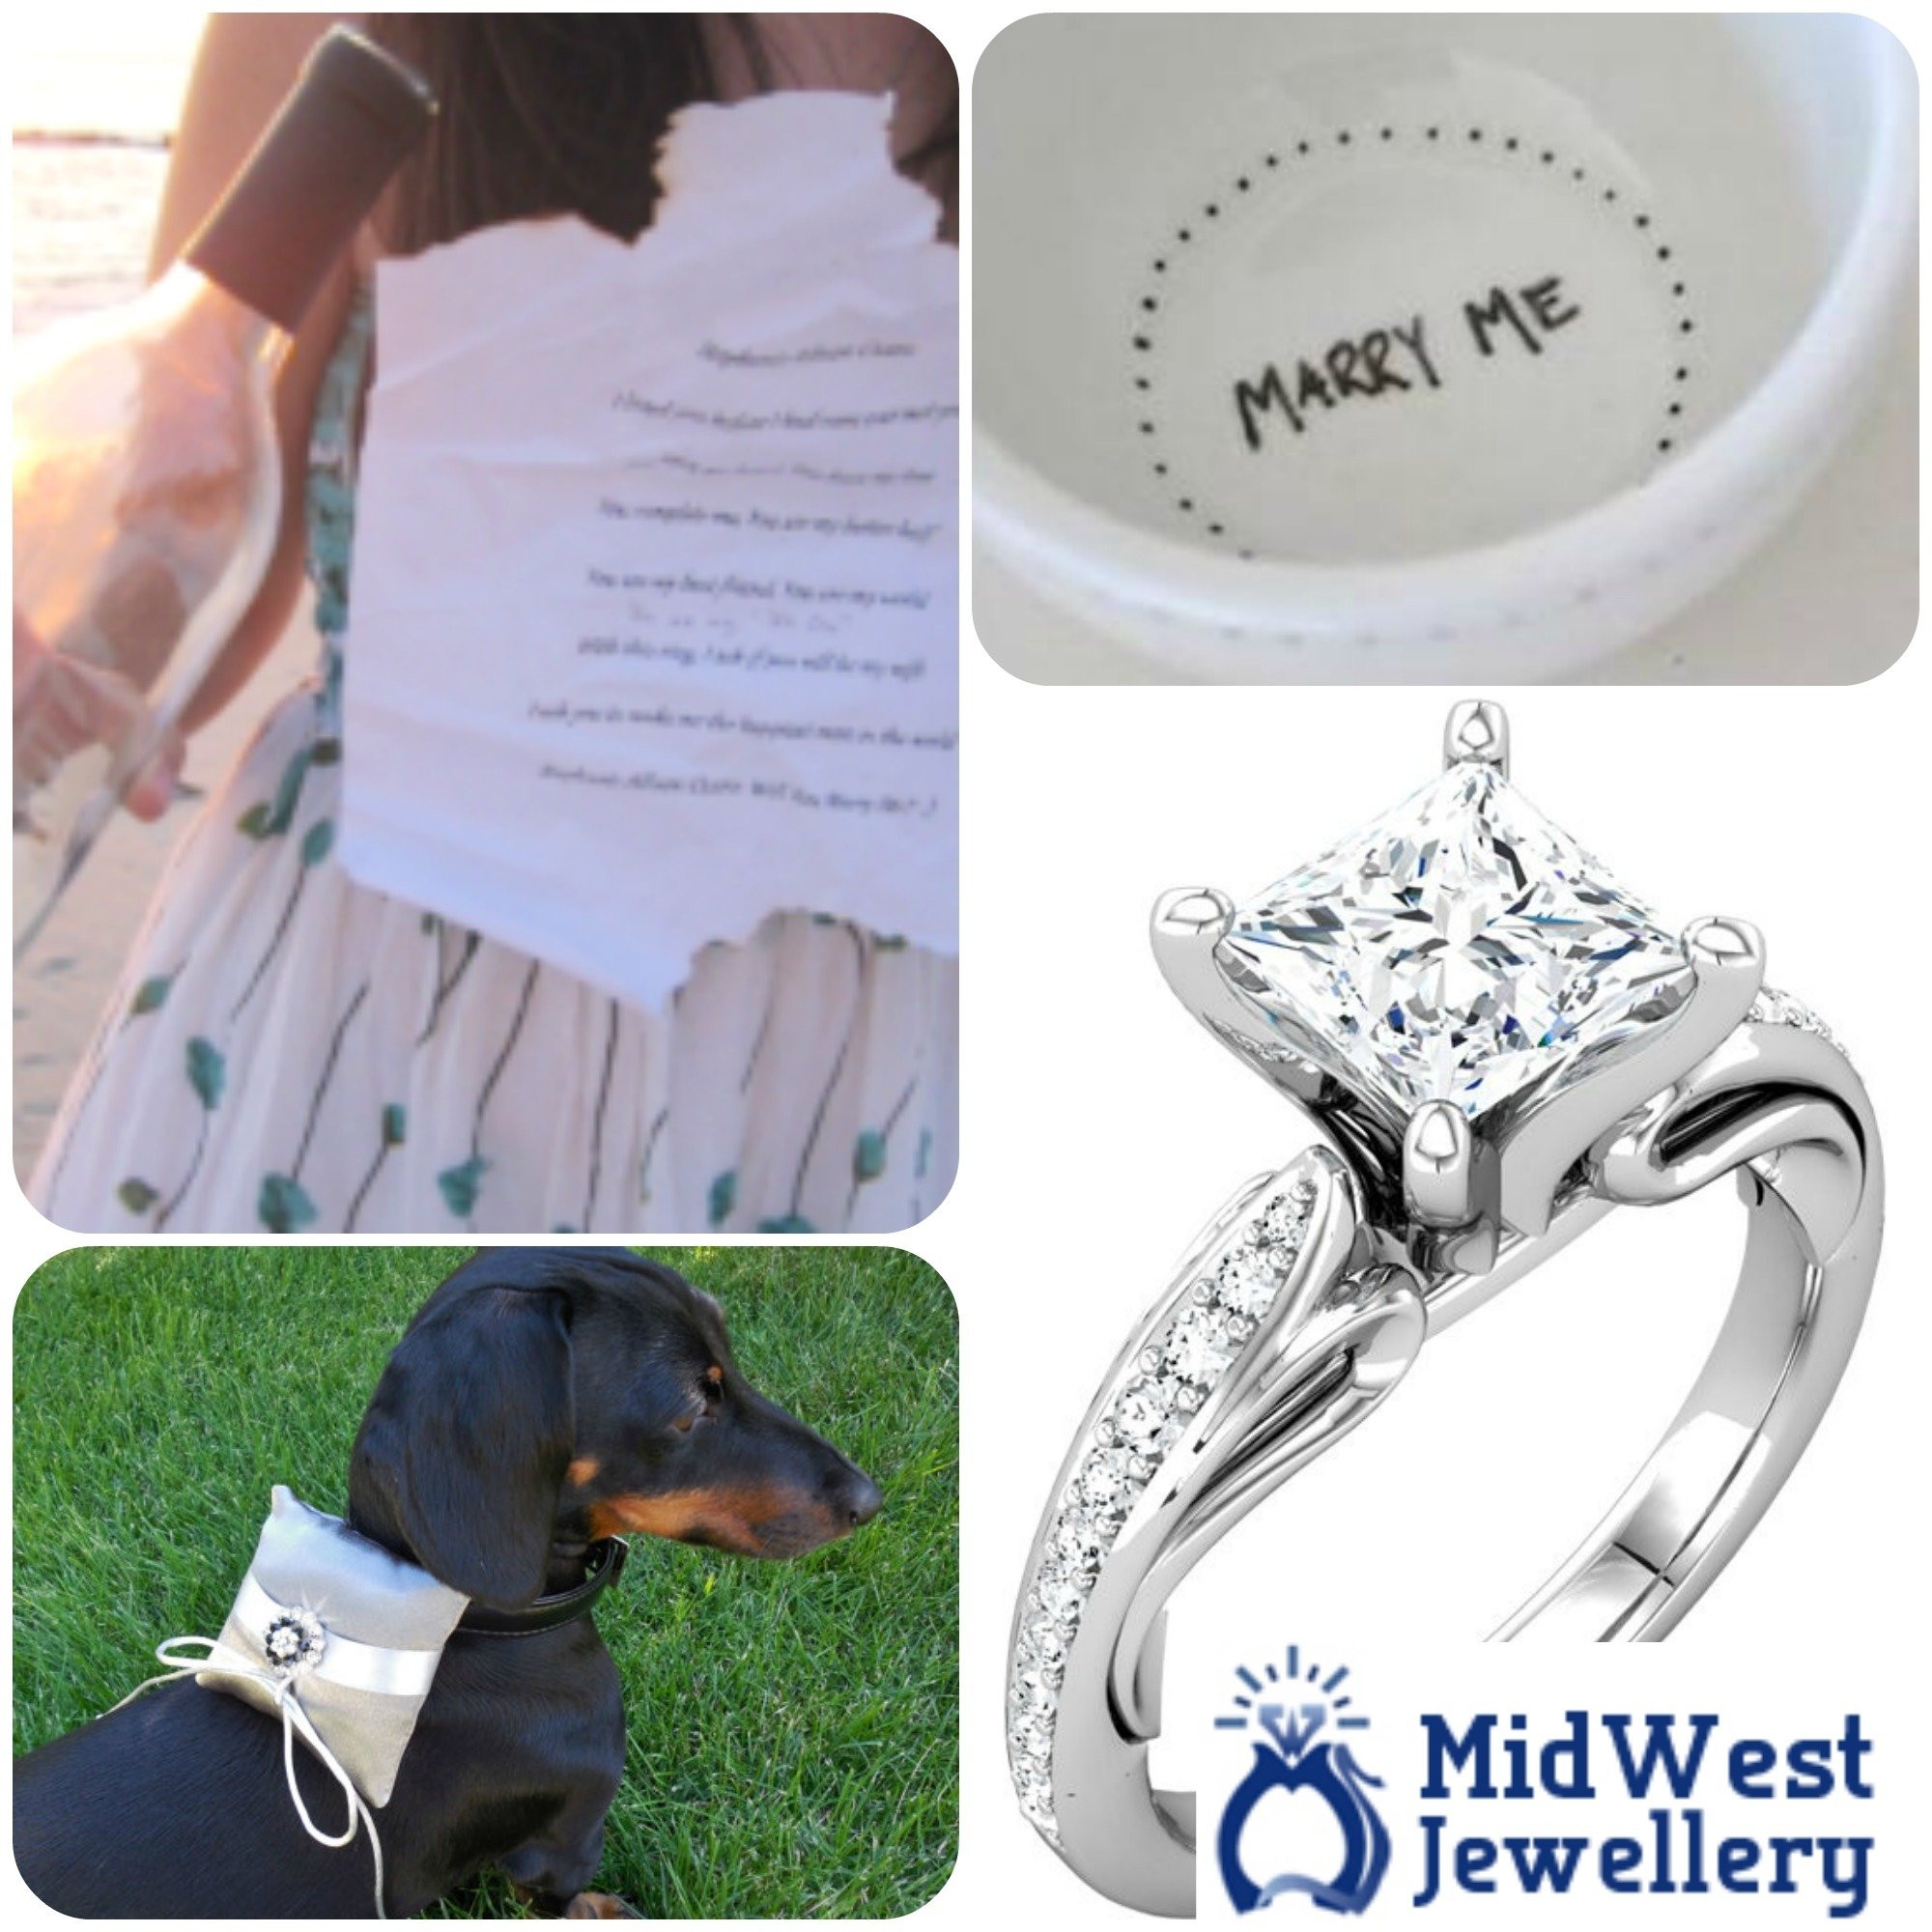 10 Stylish Marriage Proposal Ideas For Men marriage proposal ideas midwestjewellery blog 2022